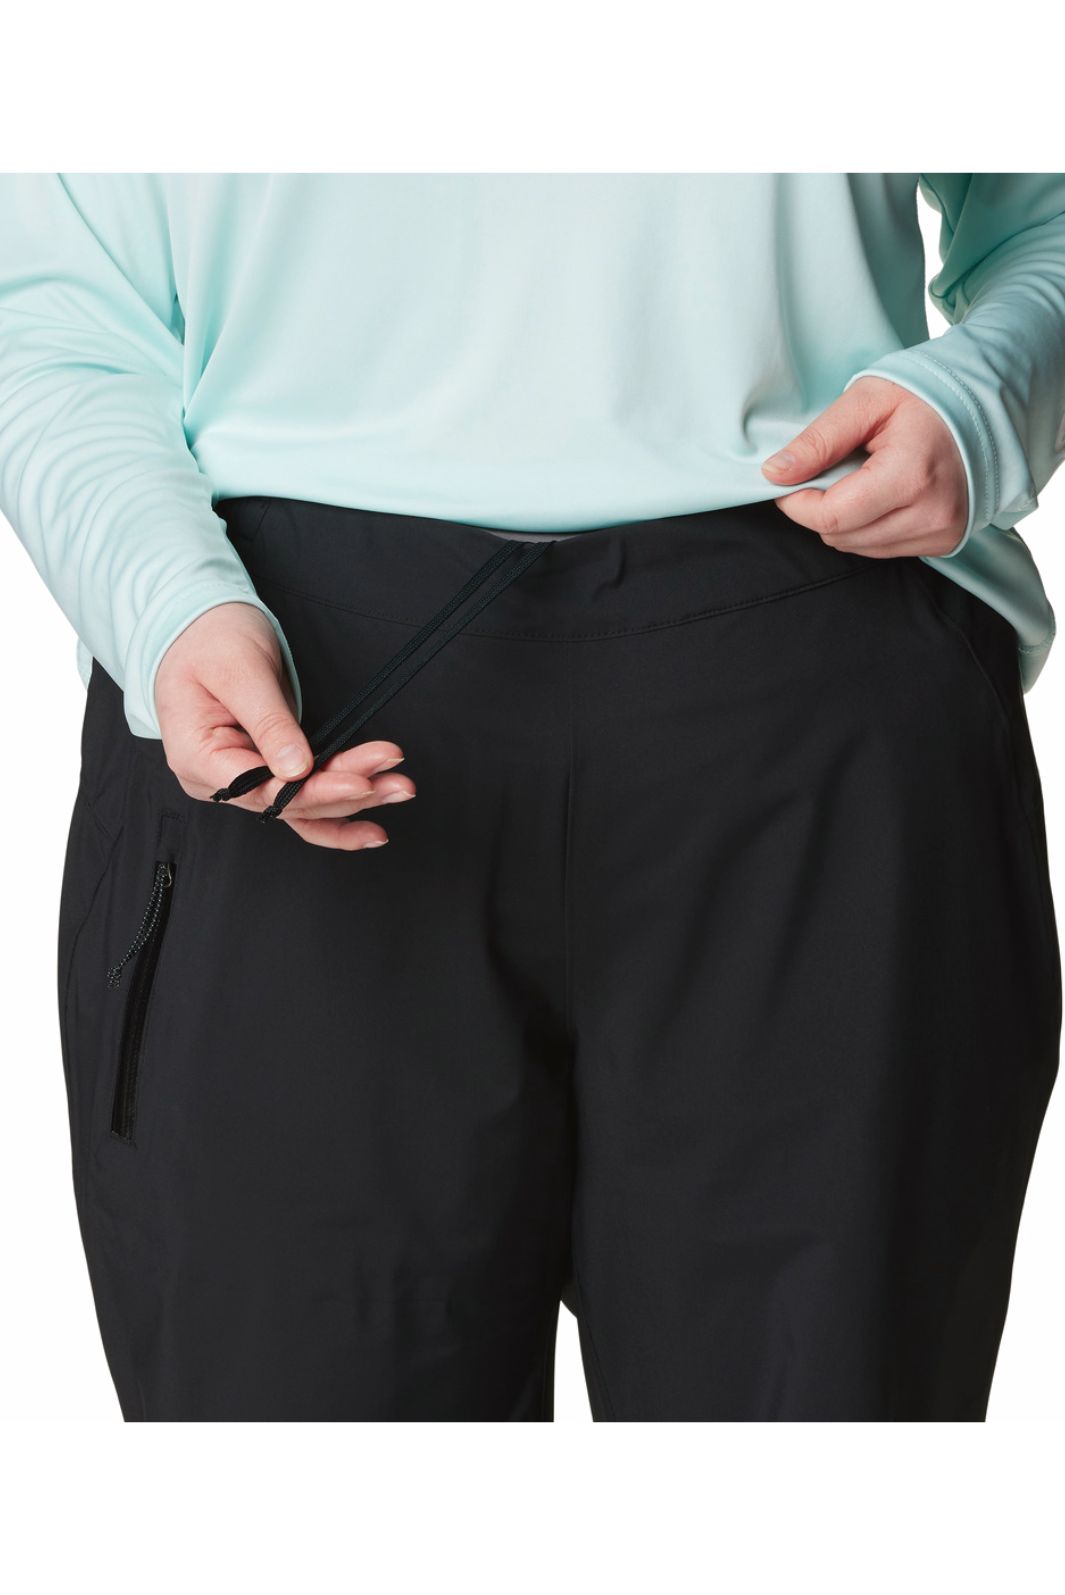 Women's Leggings High Waisted Winter Thermal Long Pants Bottom One-Piece  Pants Skinny Pants Yoga Pants,XS-3XL